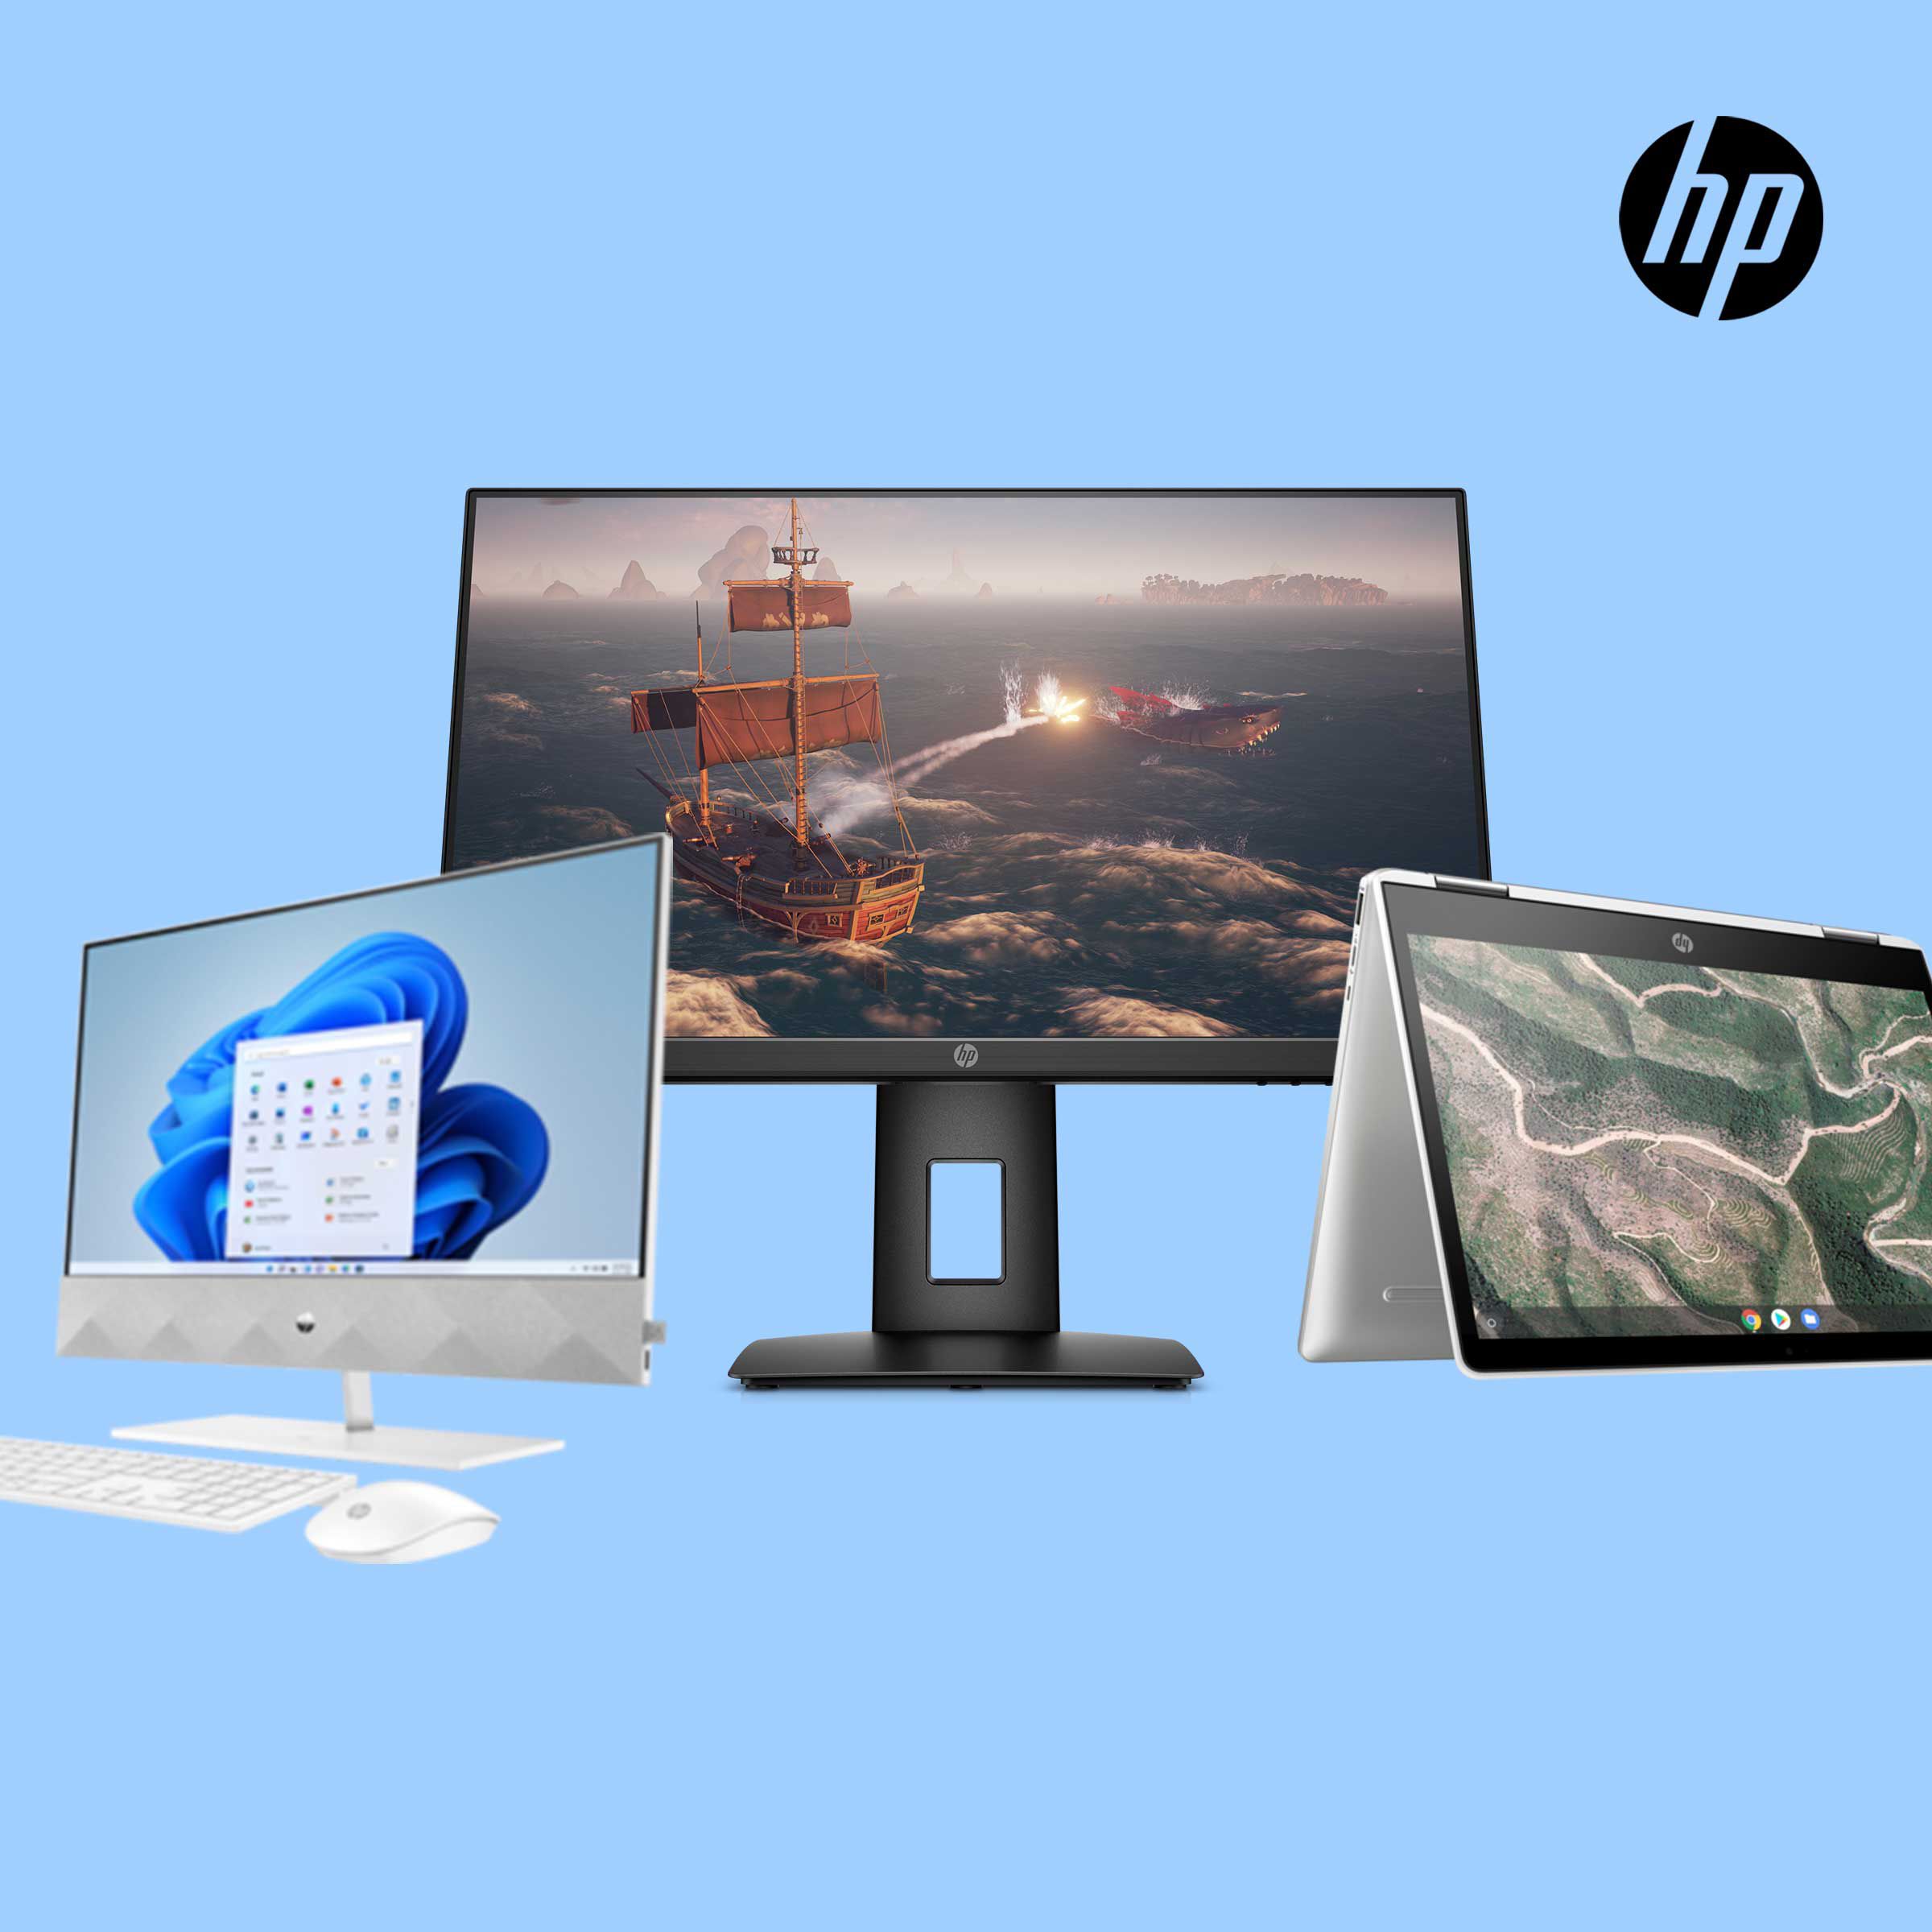 Discover the Amazing range HP Monitors, AIO Desktops and Chromebooks